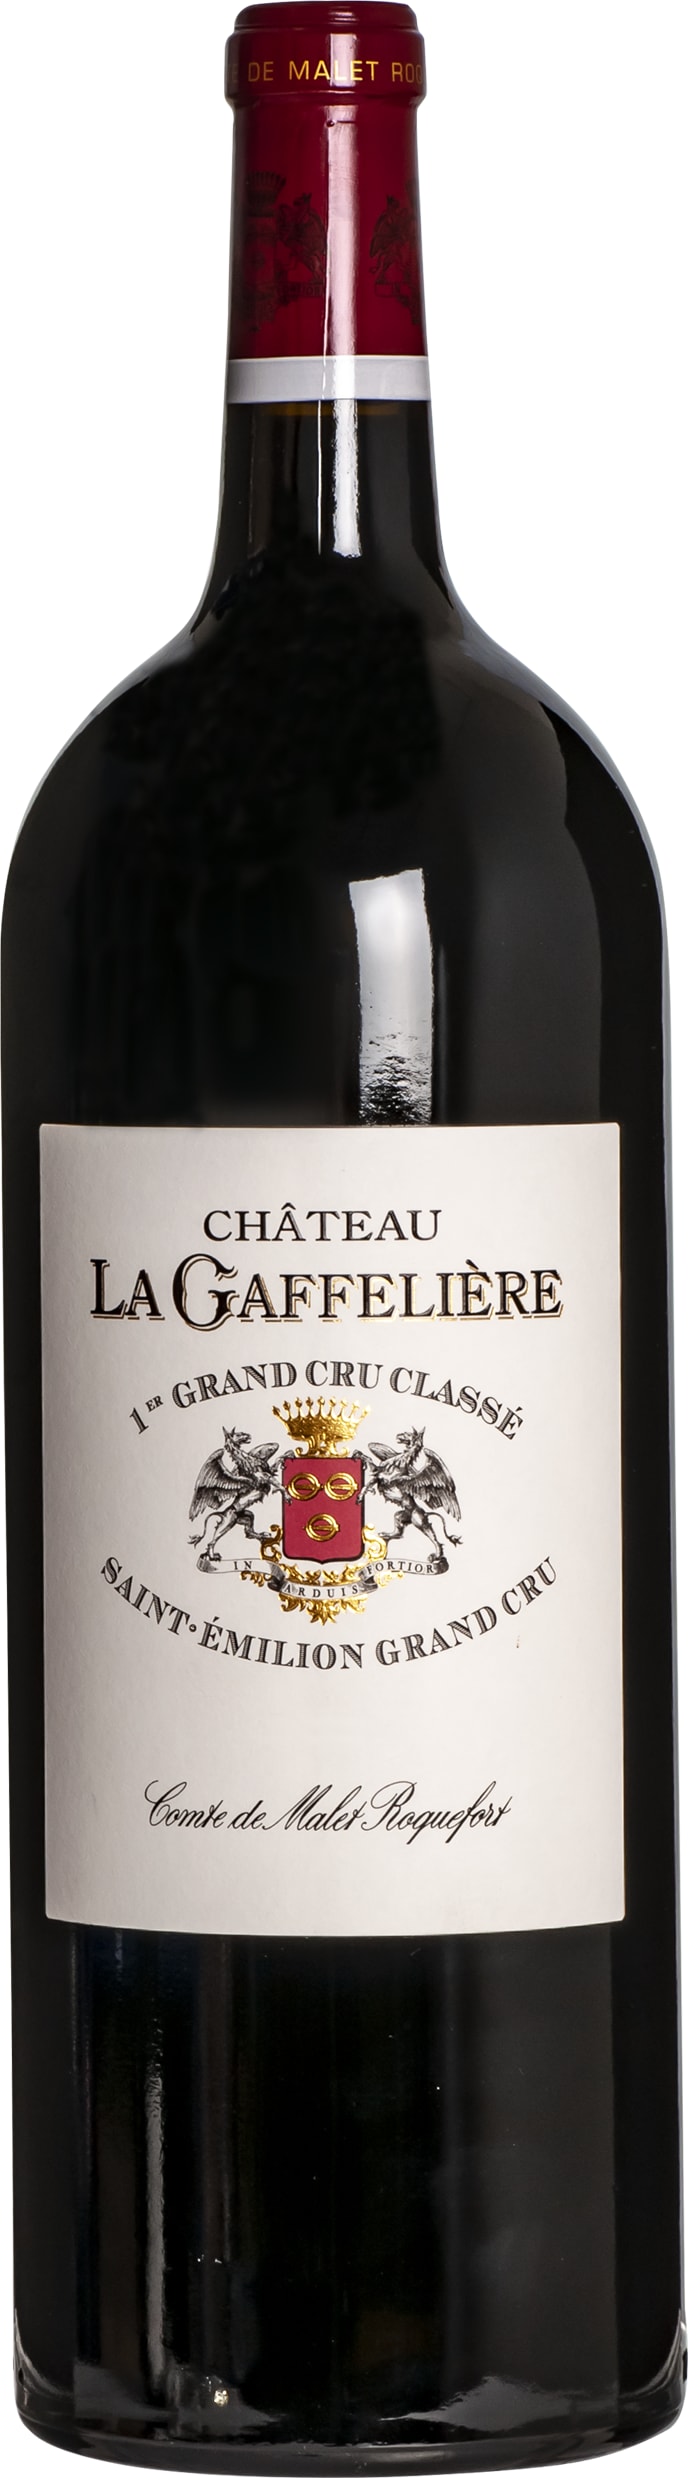 Chateau La Gaffeliere Saint Emilion Premier Grand Cru Classe Magnum 2015 150cl - Buy Chateau La Gaffeliere Wines from GREAT WINES DIRECT wine shop